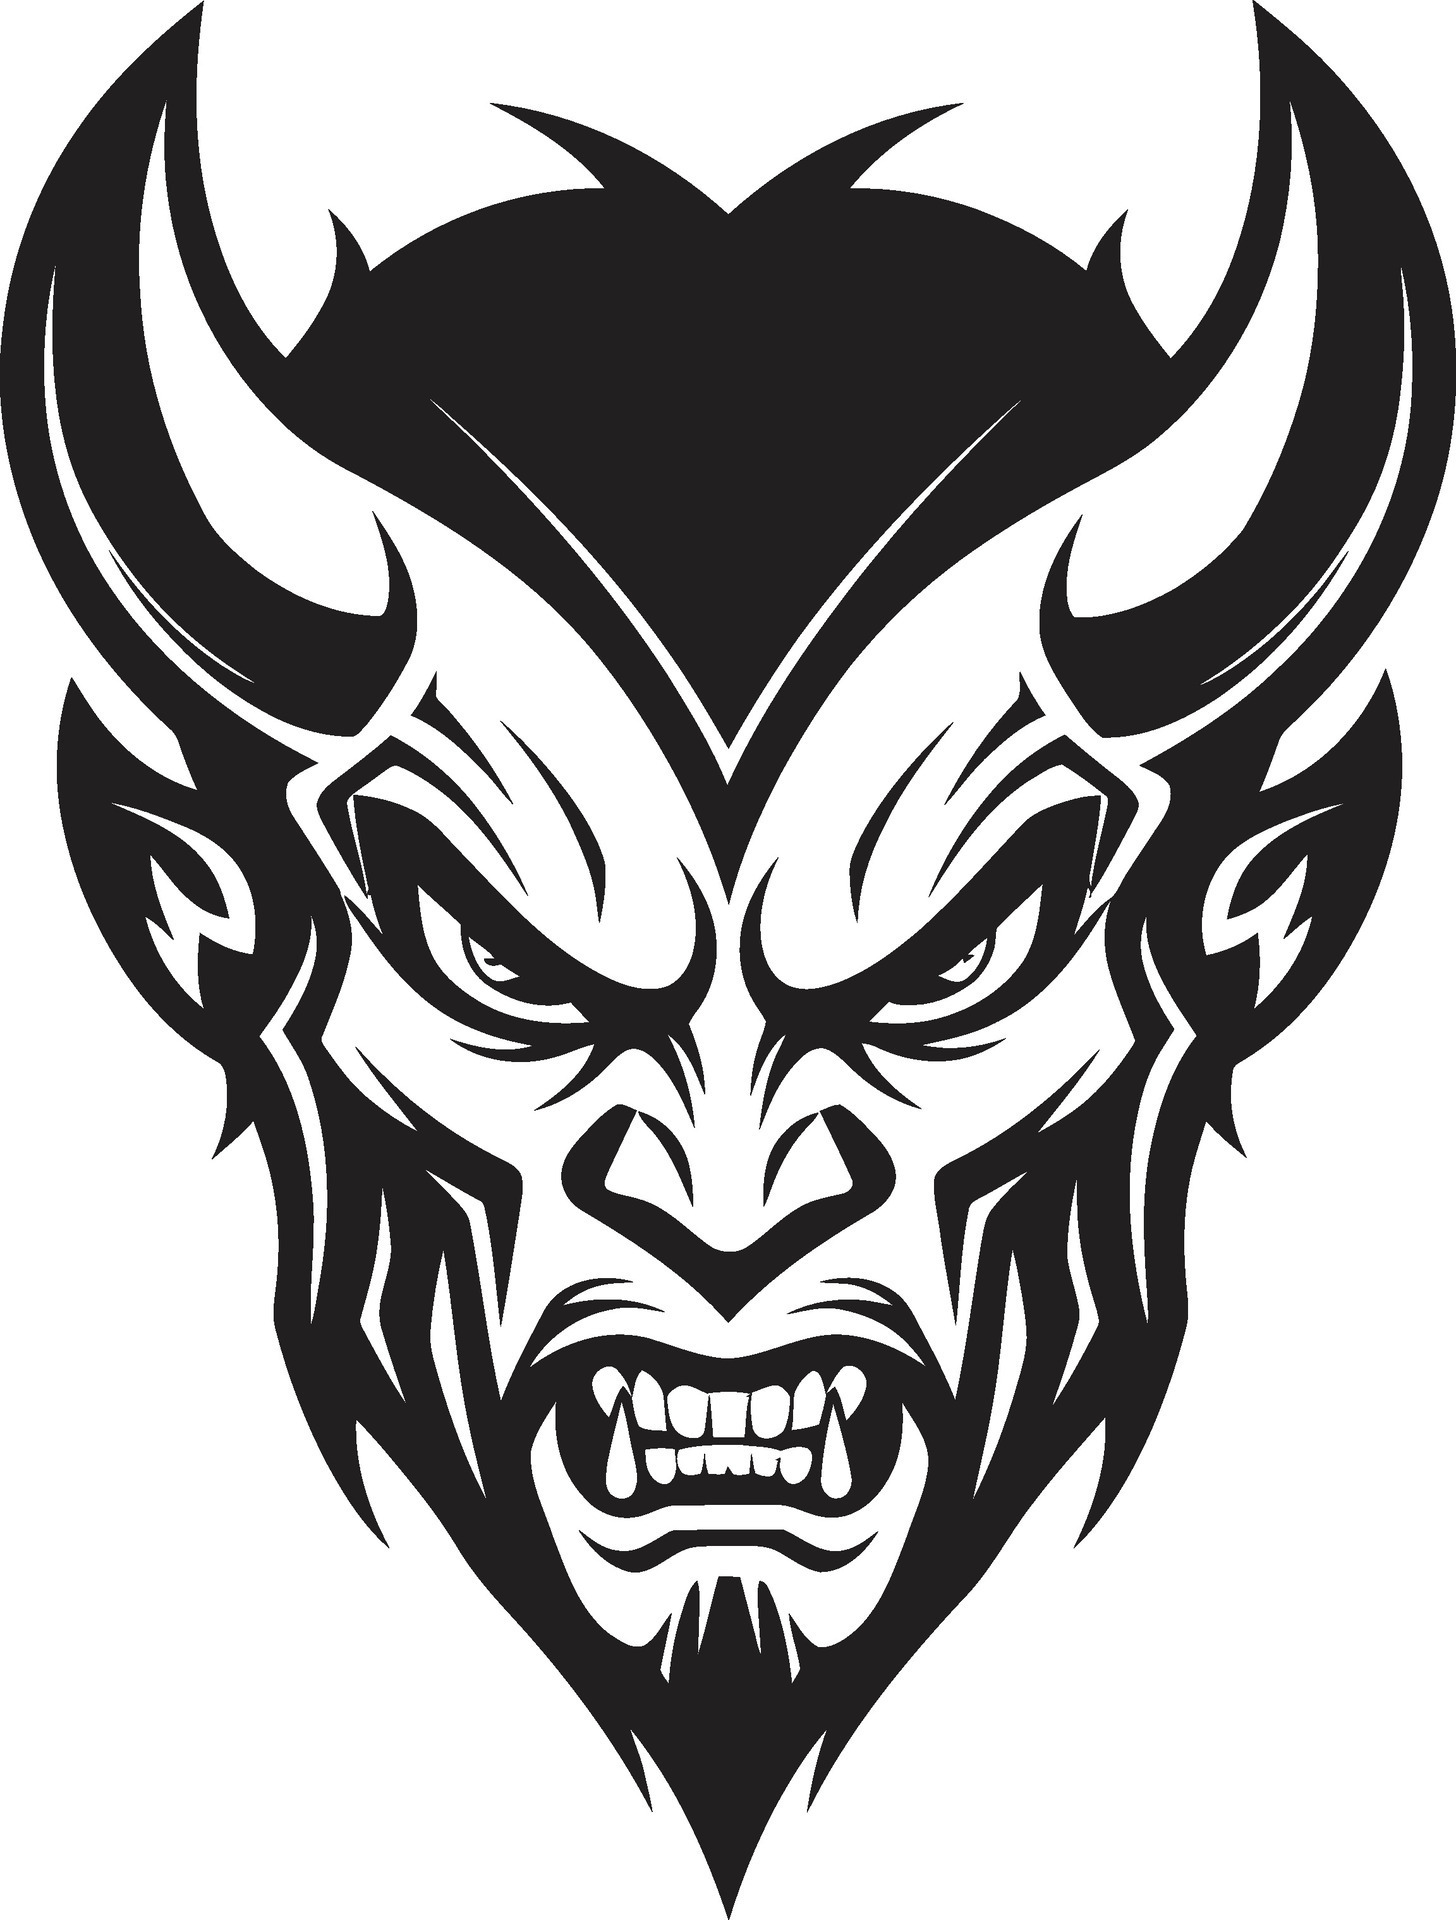 Hellish Grin Aggressive Devil s Face Logo Design Demonic Impression ...